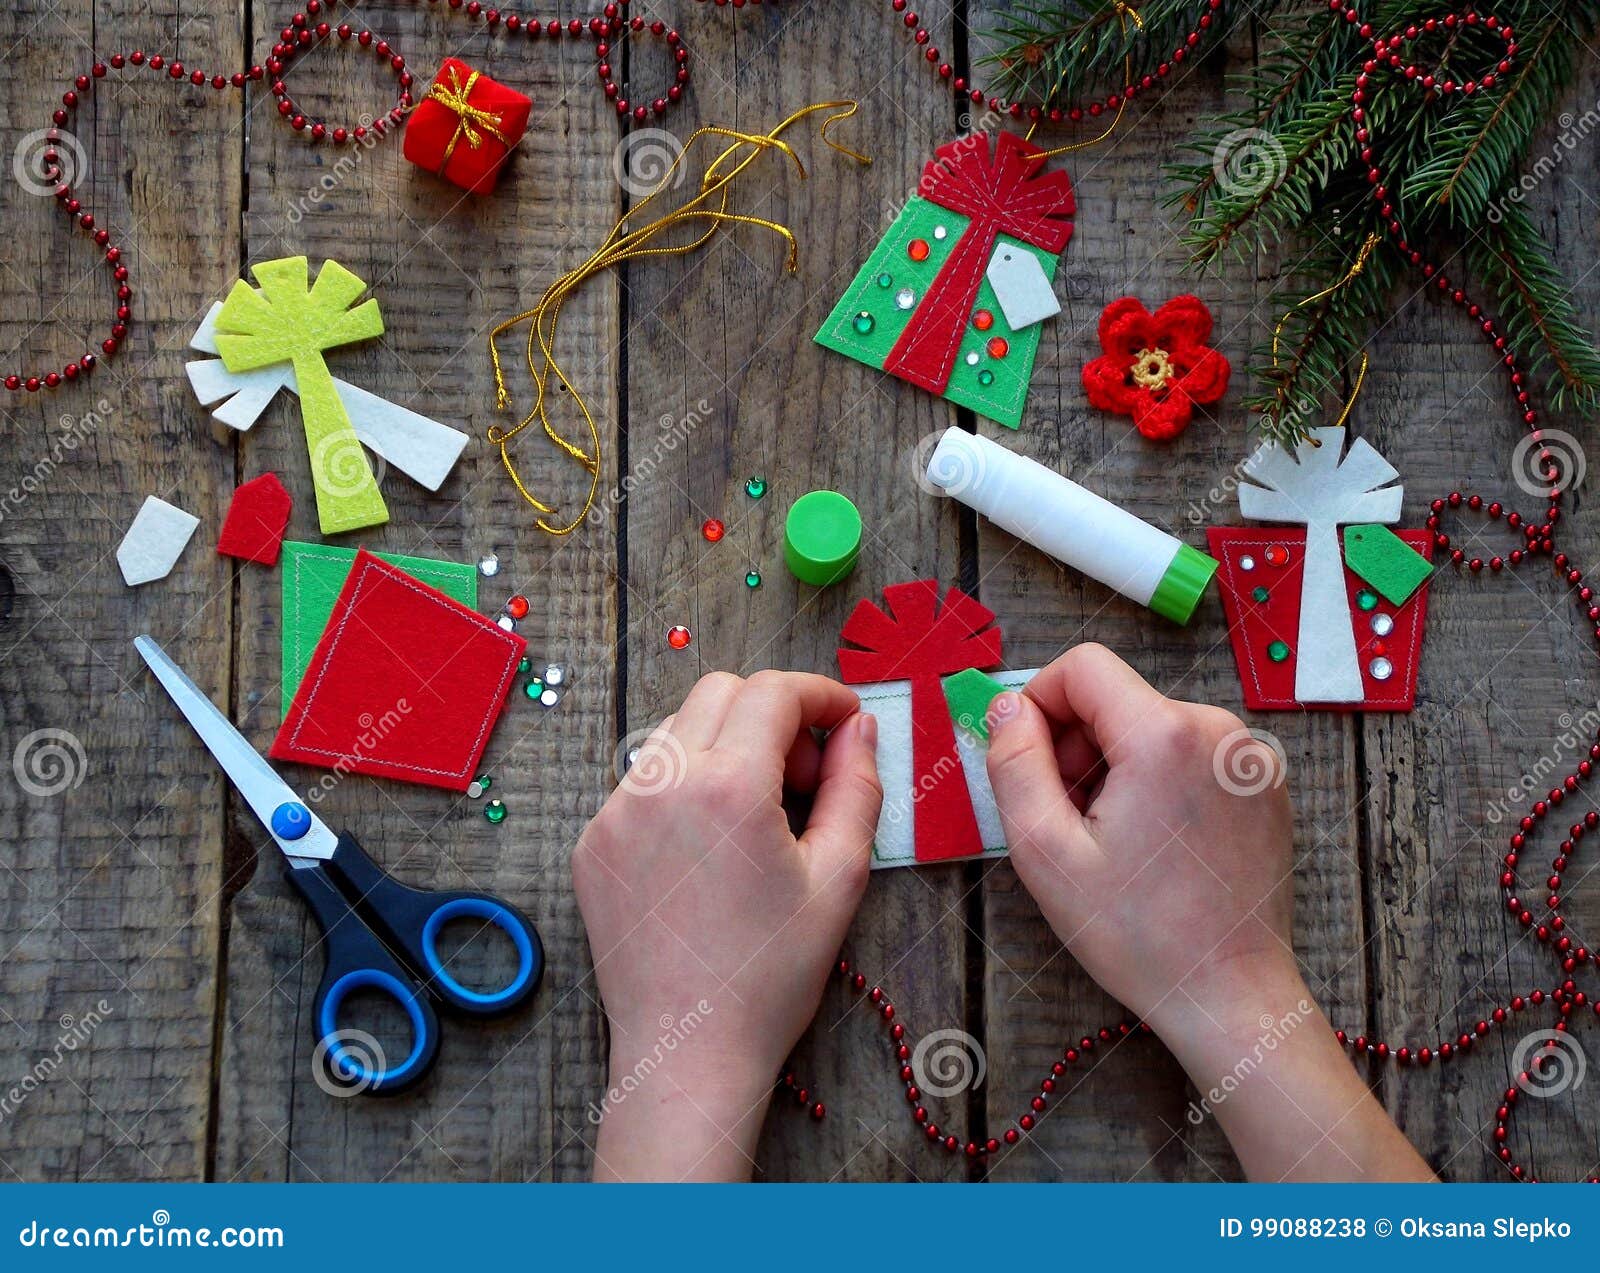 Making Of Handmade Christmas Toys From Felt Christmas Card Stock Photo Image Of Holiday Christmas 99088238